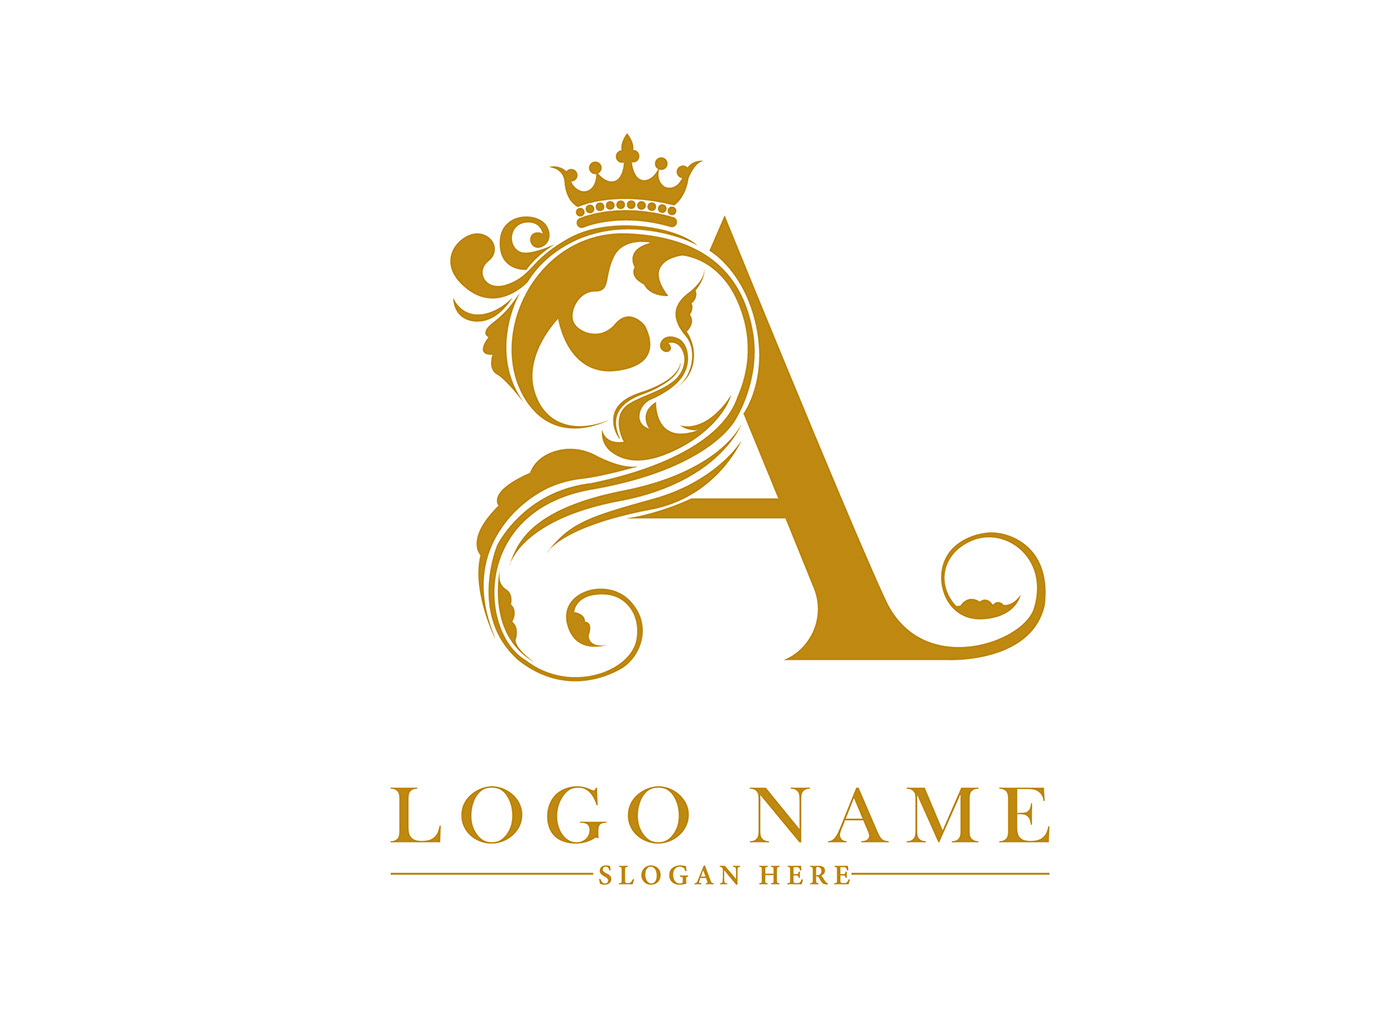 word mark logo design logos Logo Design brand identity Graphic Designer Brand Design designer word logo letter minimalist